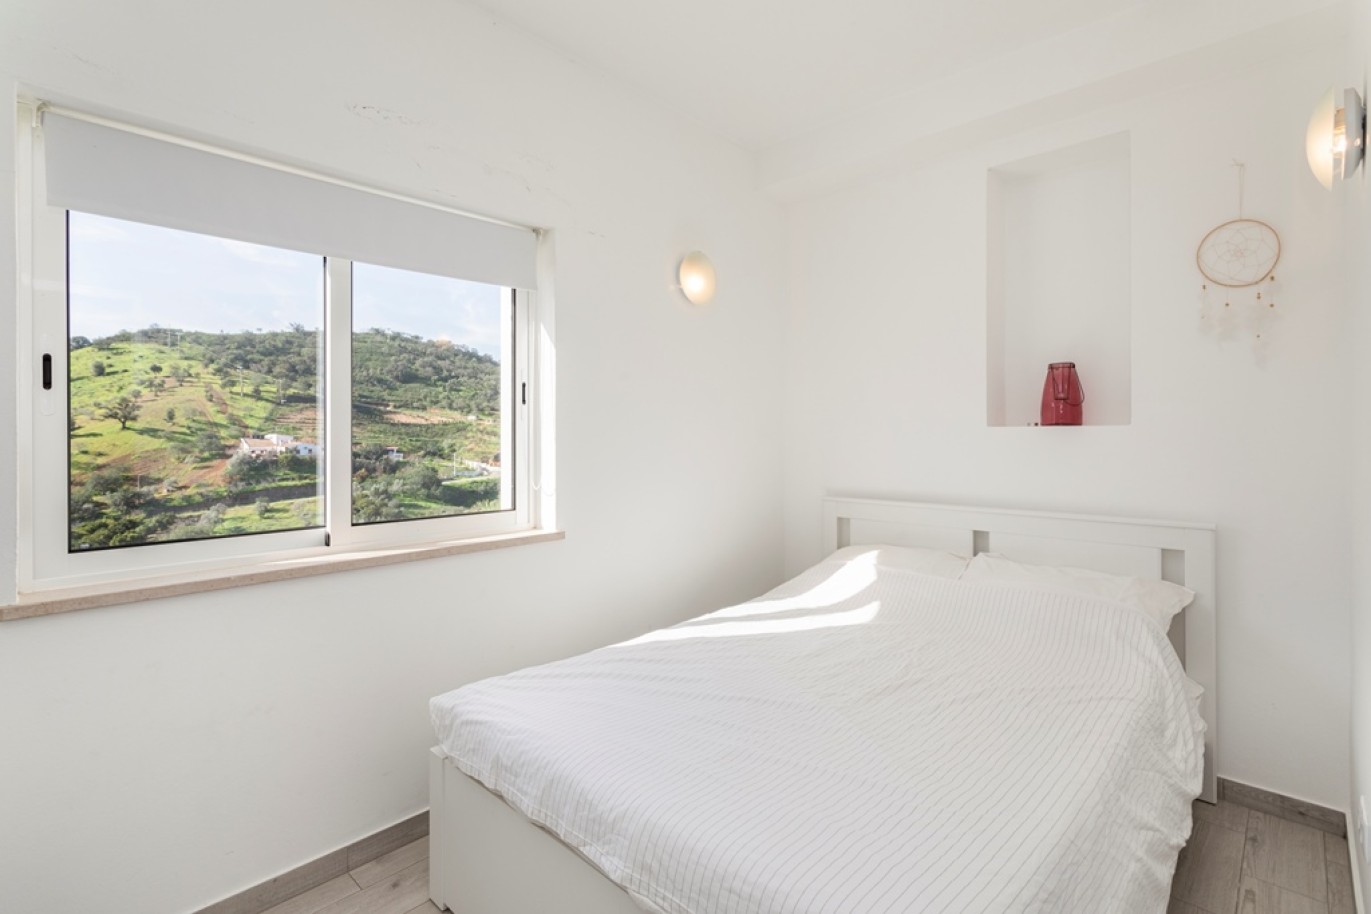 Fantastique villa indépendante de 5 chambres à vendre à Santa Catarina Fonte de Bispo, Algarve_253557